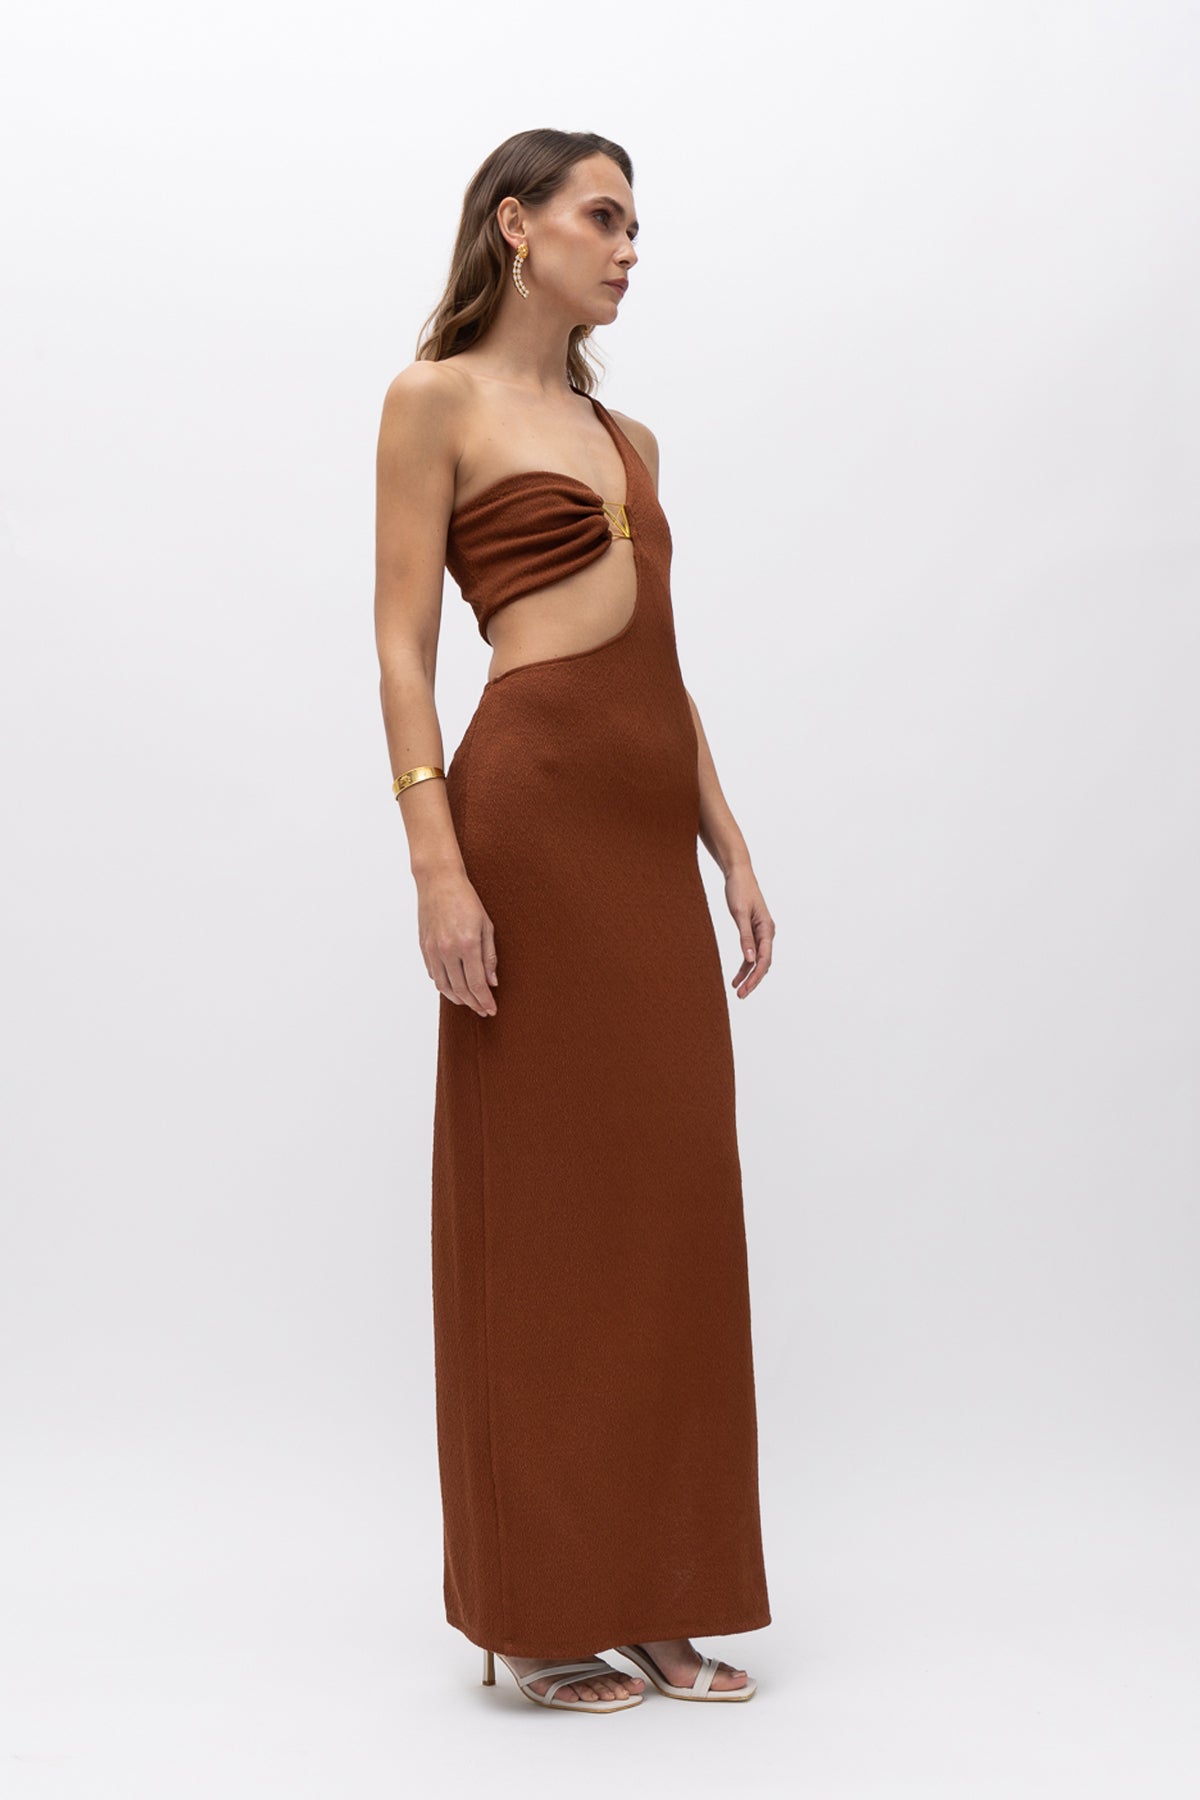 Amazon Brown Dress